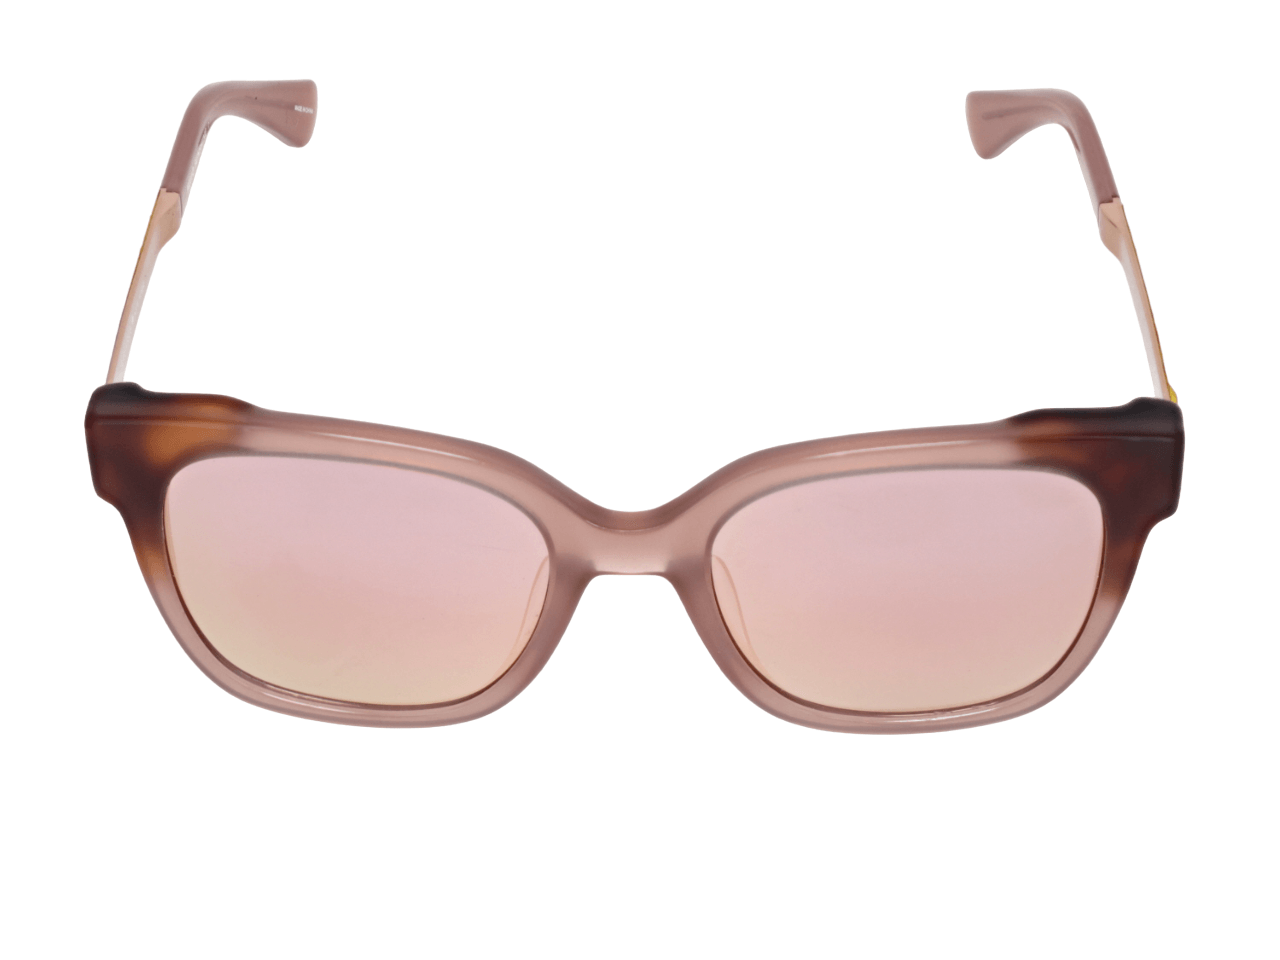 Kate Spade, Women's Caelyn Square Sunglasses, Nude Havana - Vision 770